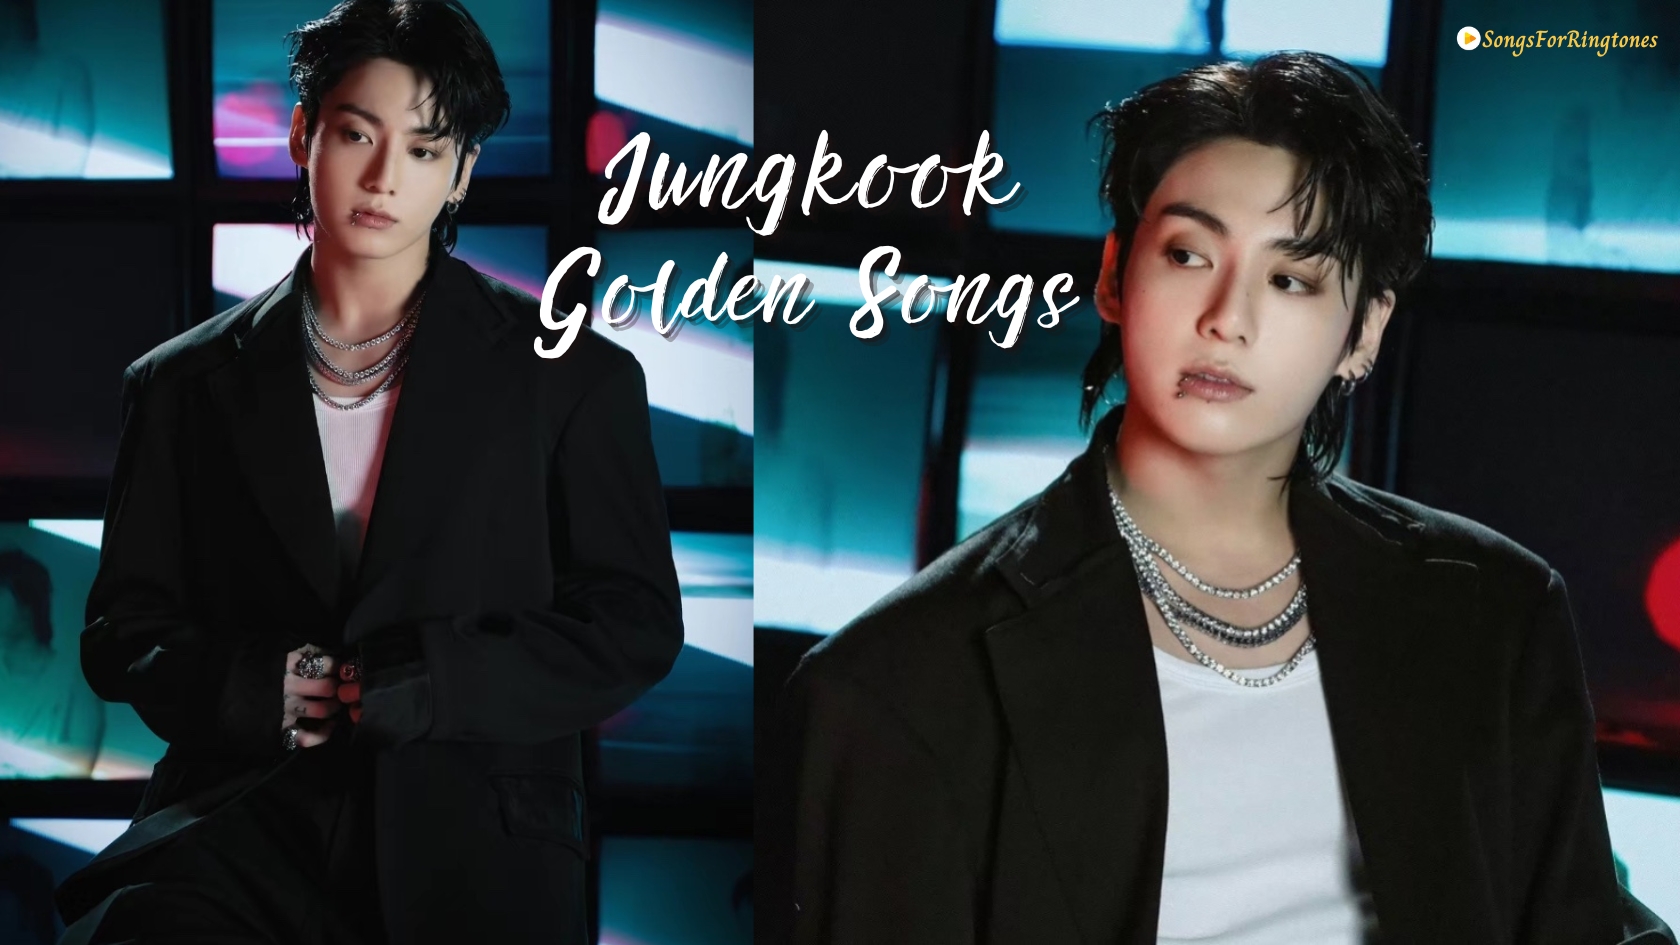 Exploring Jungkook Golden Songs: A Musical Journey Beyond Boundaries